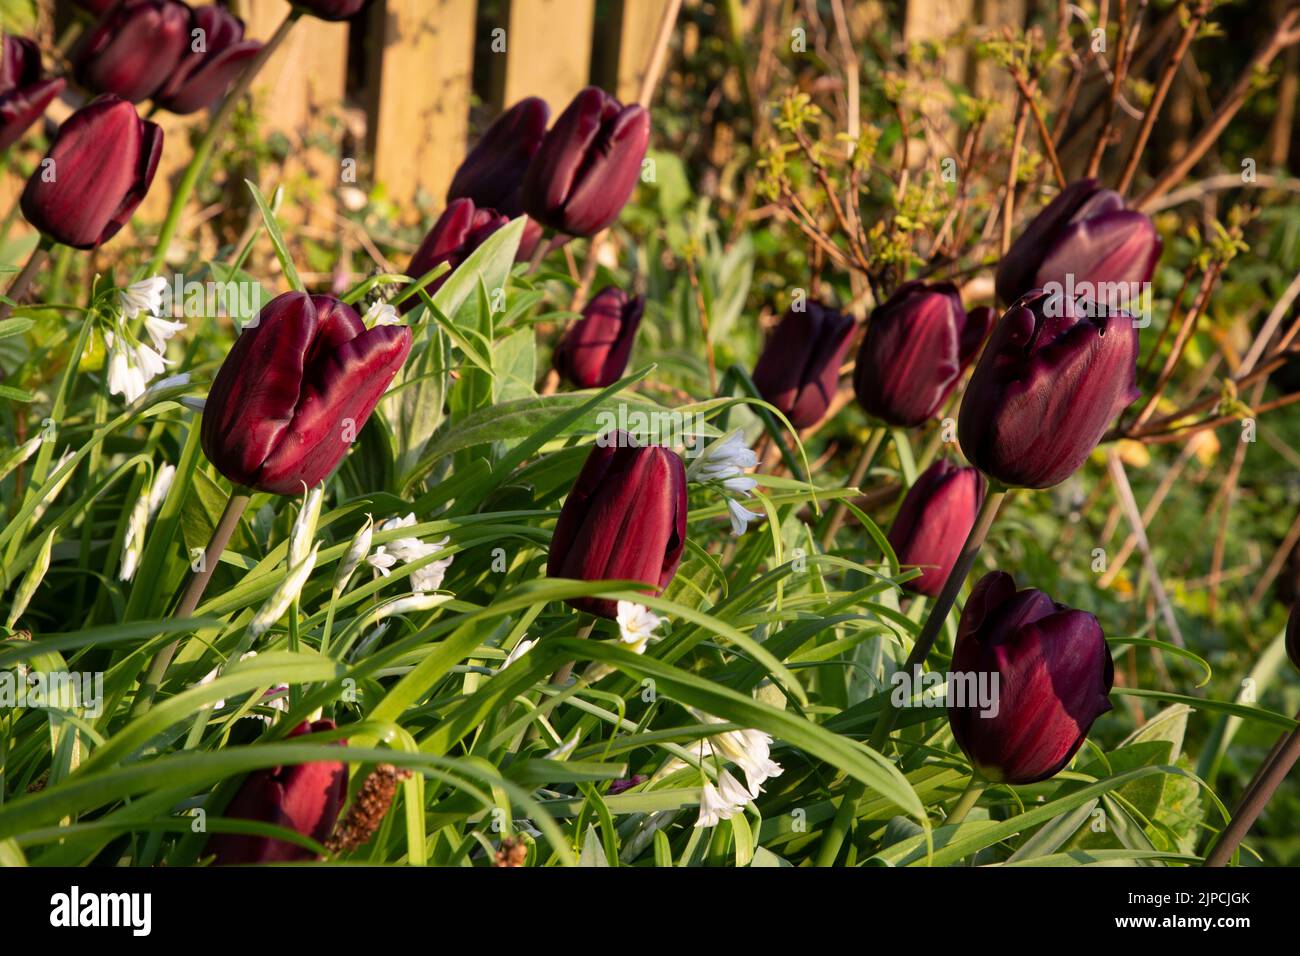 Garten mit var. Continental Tulip Tulpen Tulipa Blume blüht in einem Garten Grenze Frühling Frühling Frühling April Mai UK Stockfoto